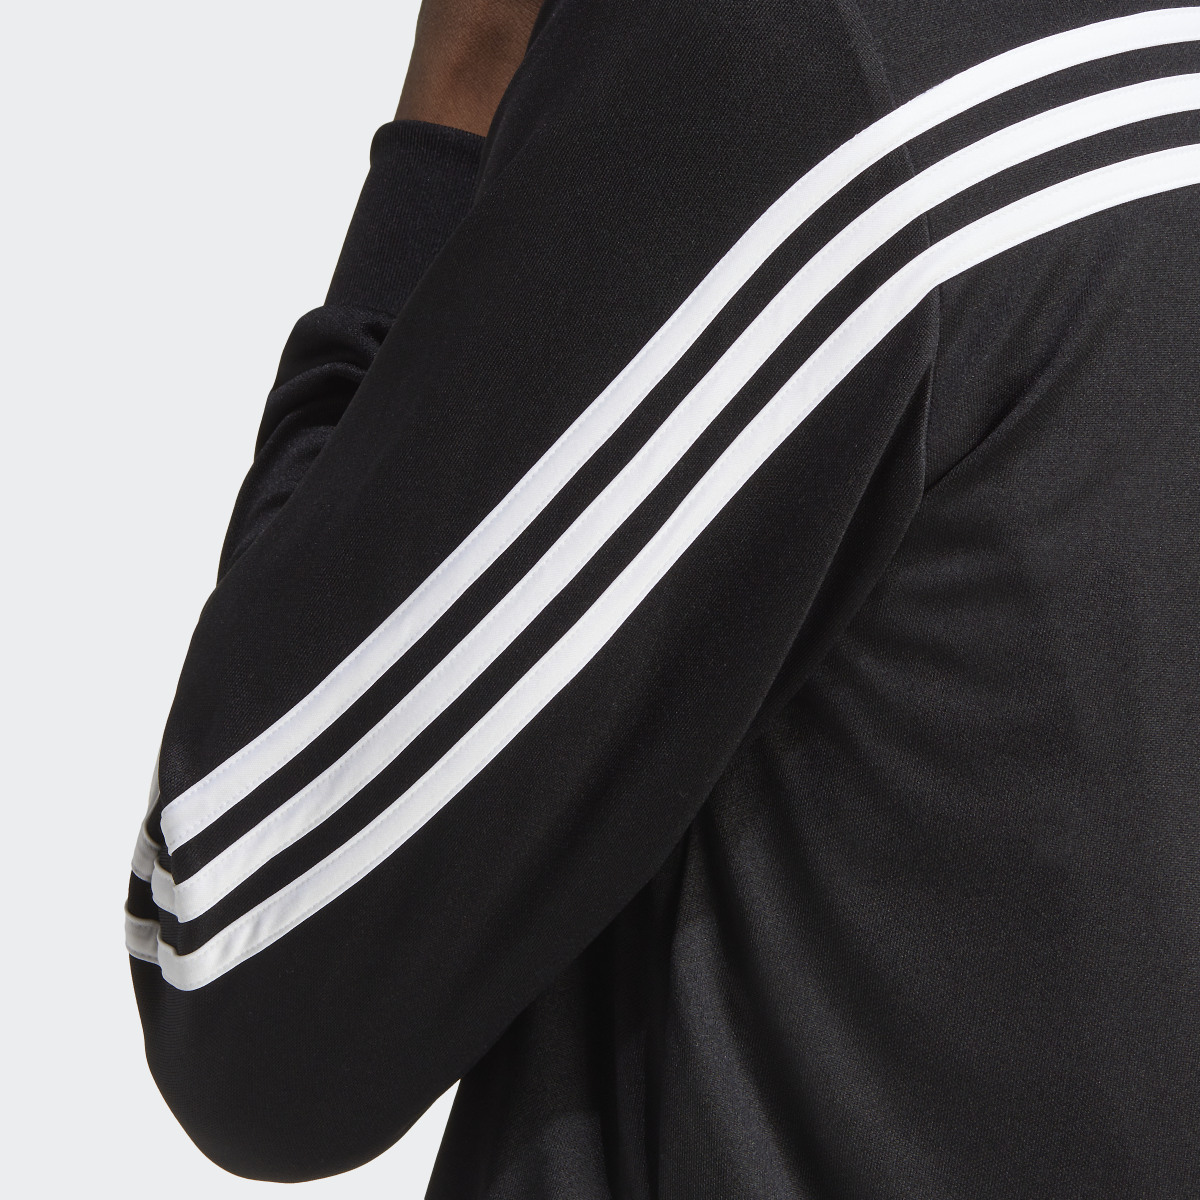 Adidas 3-Stripes Track Suit. 10